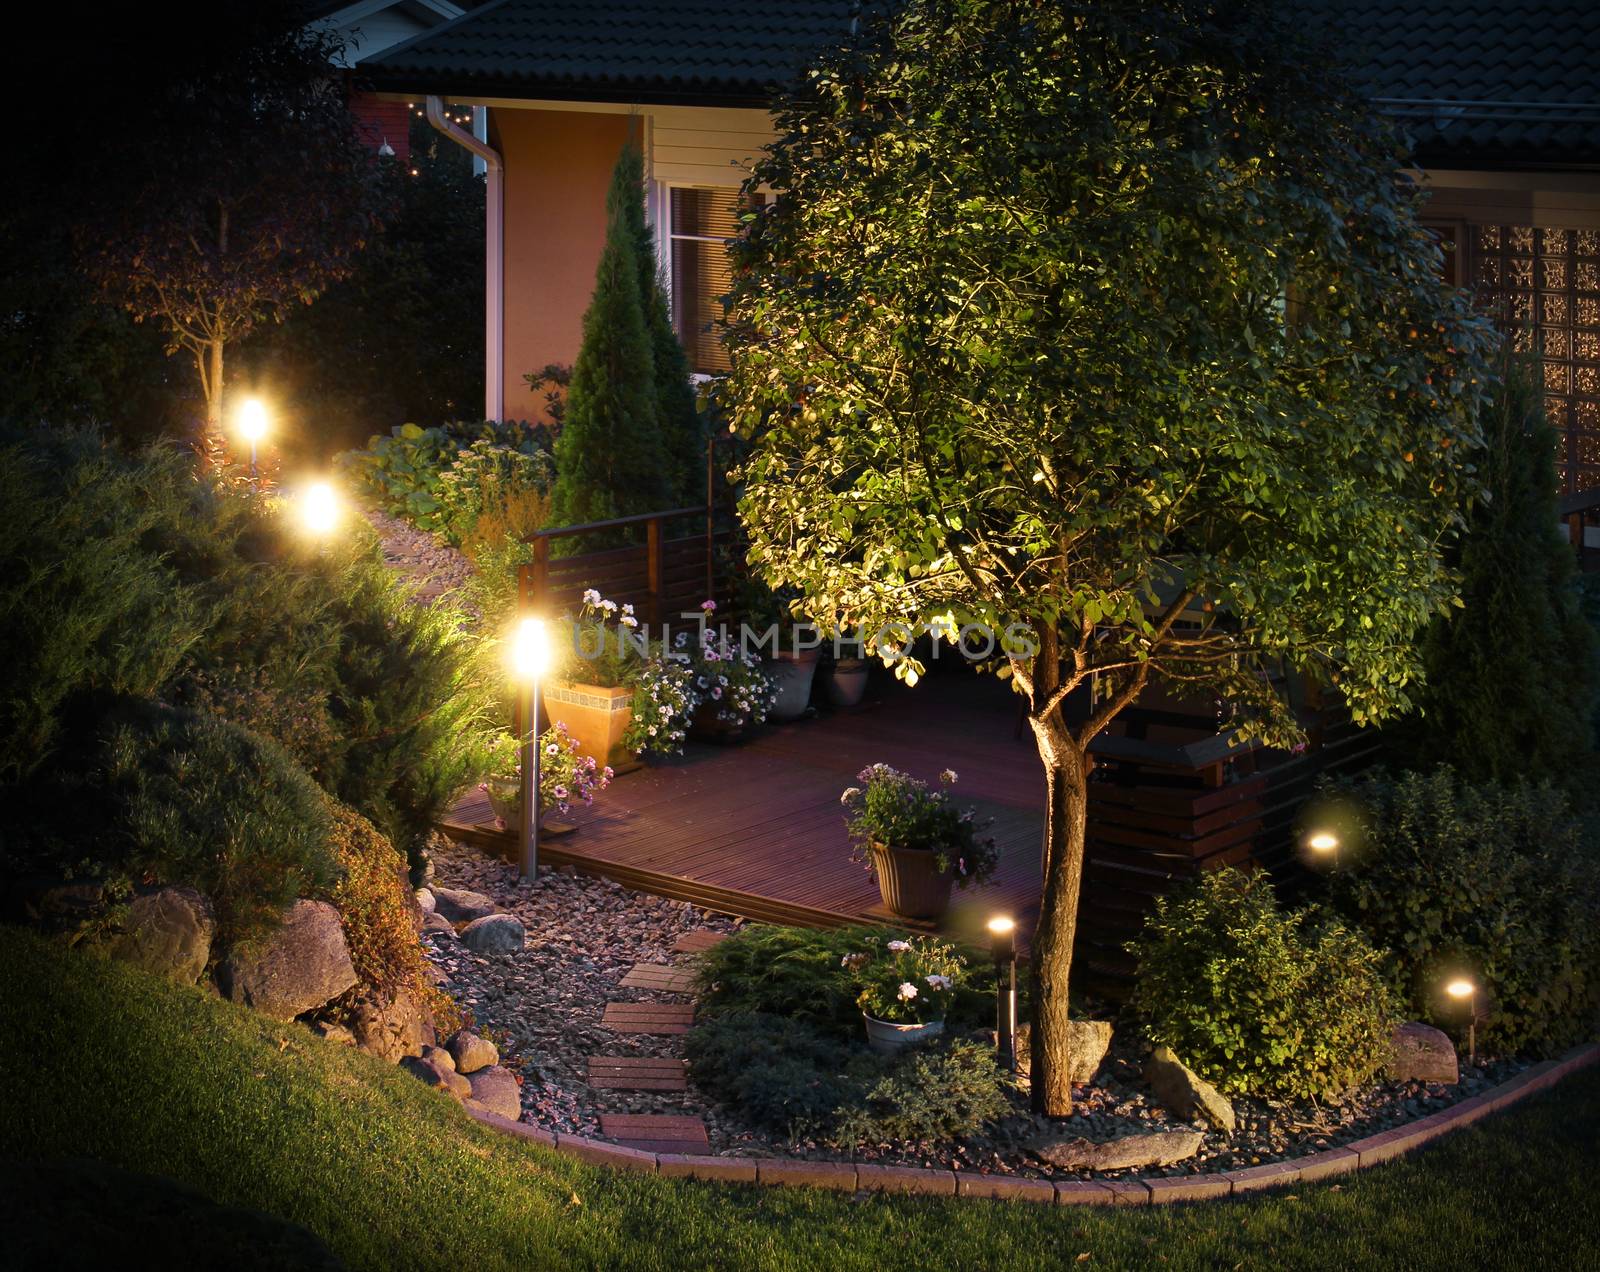 Illuminated home garden path patio lights in evening dusk